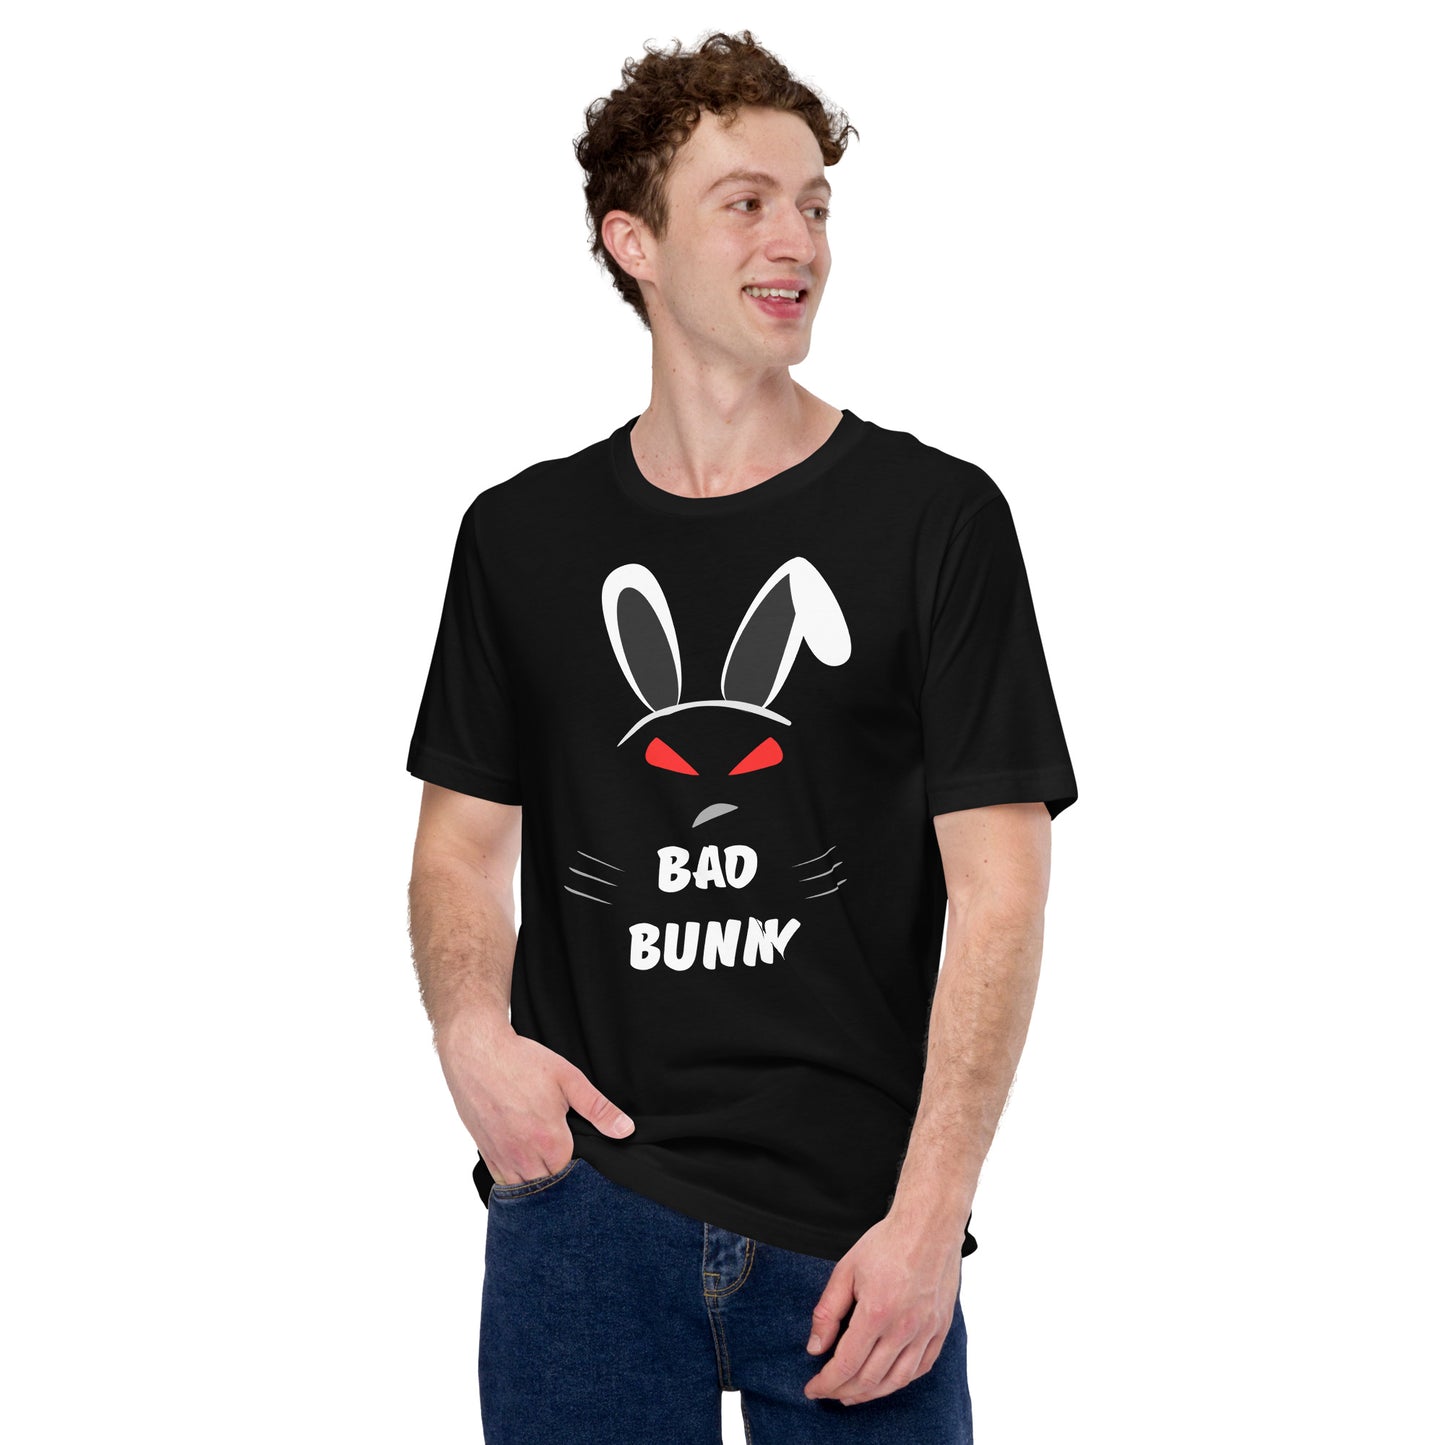 Bad Bunny T-shirt - Black Color